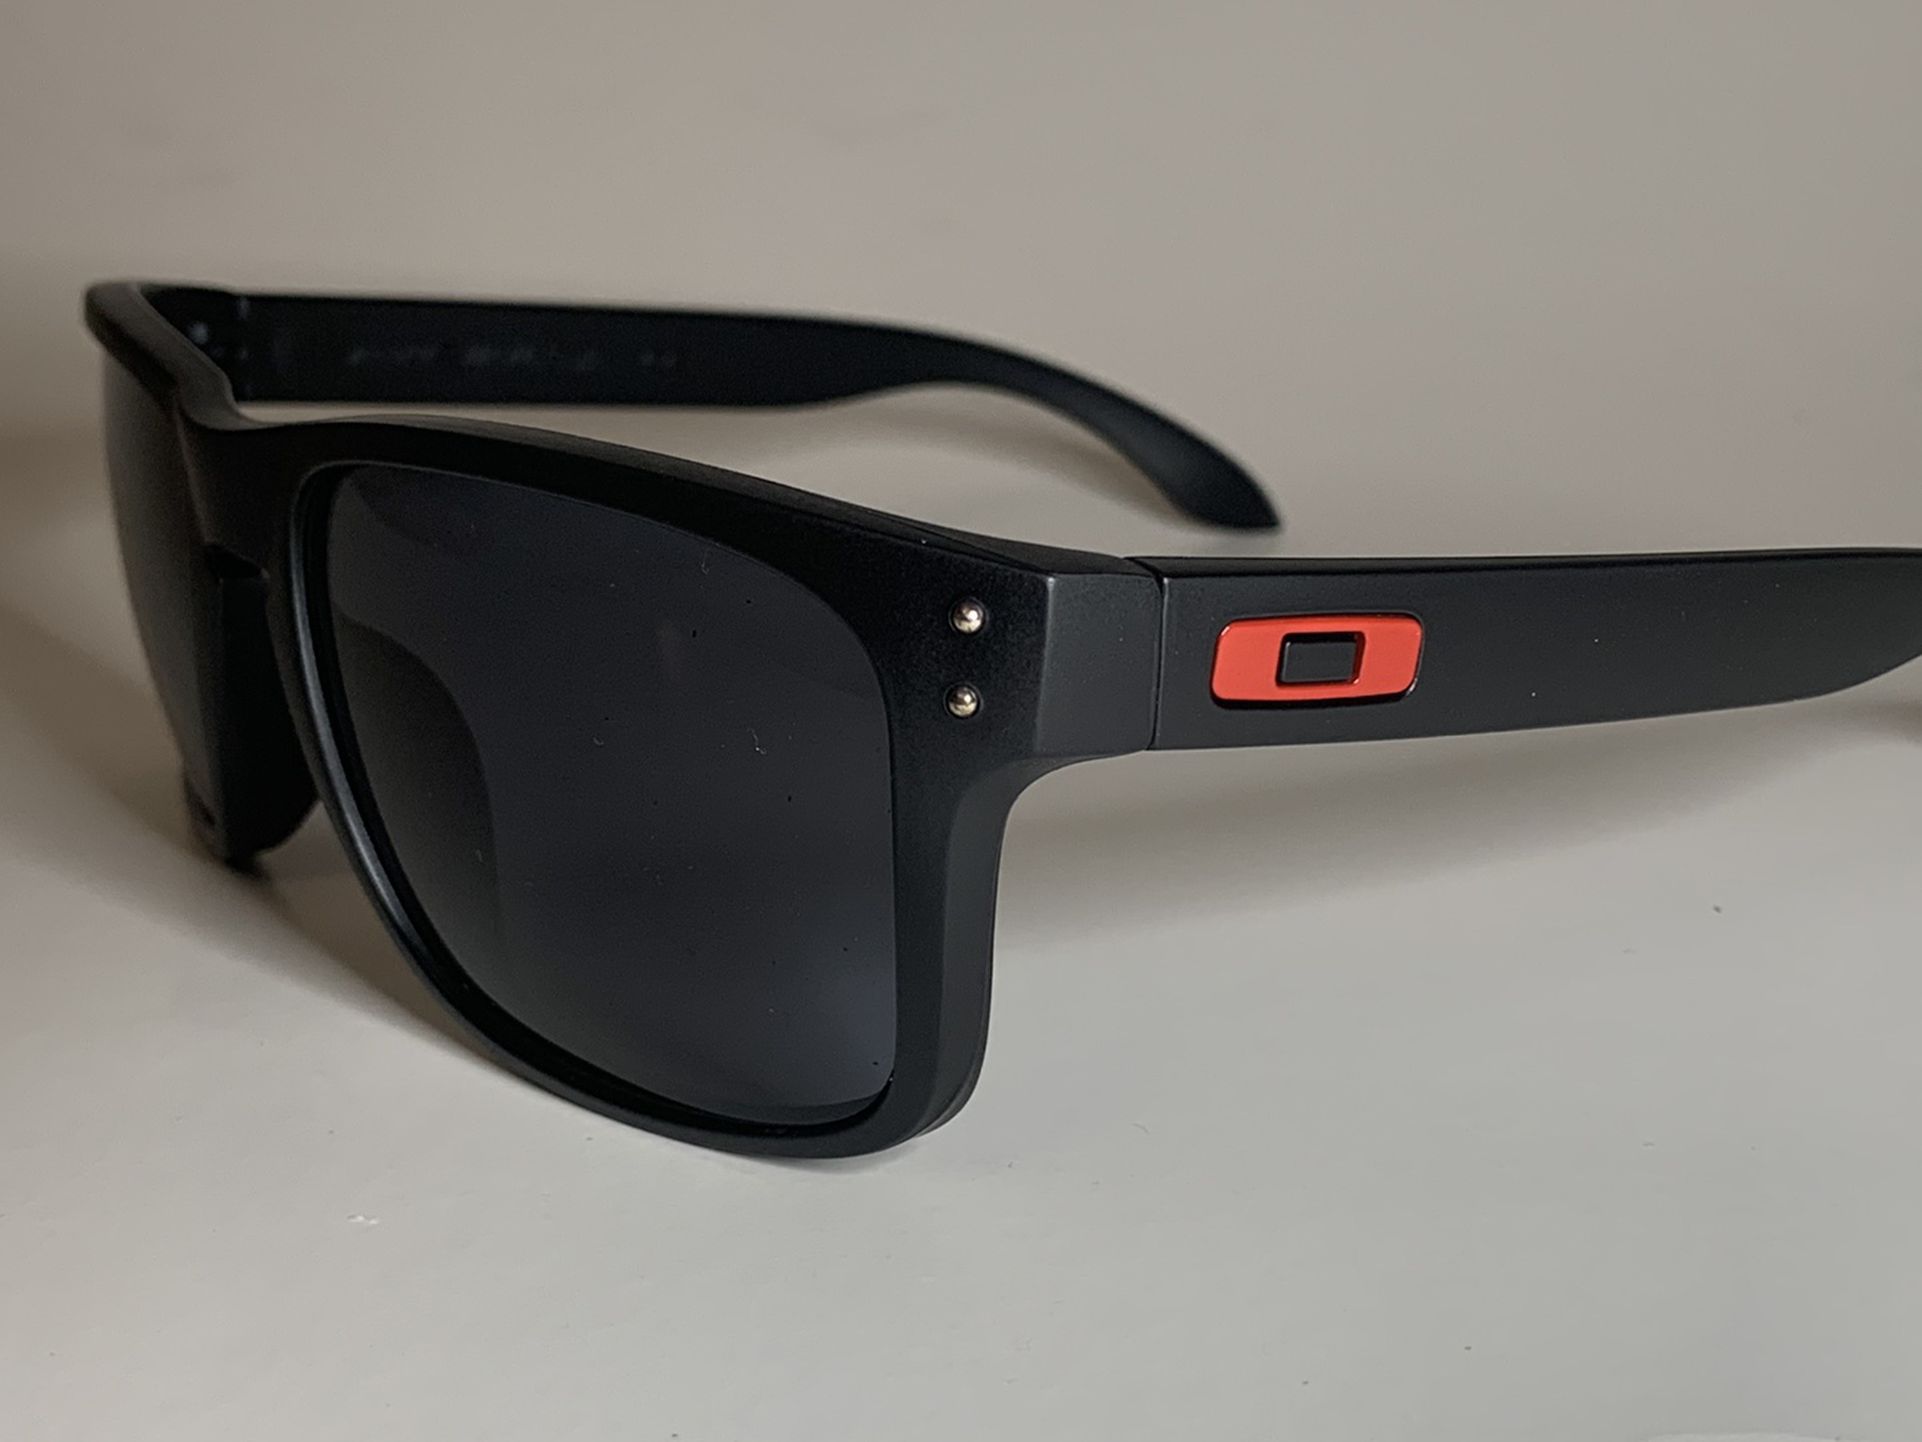 Brand new MENS sunglasses Oakley Holbrook style Pick up Lake Forest Mon-fri 8am-3pm